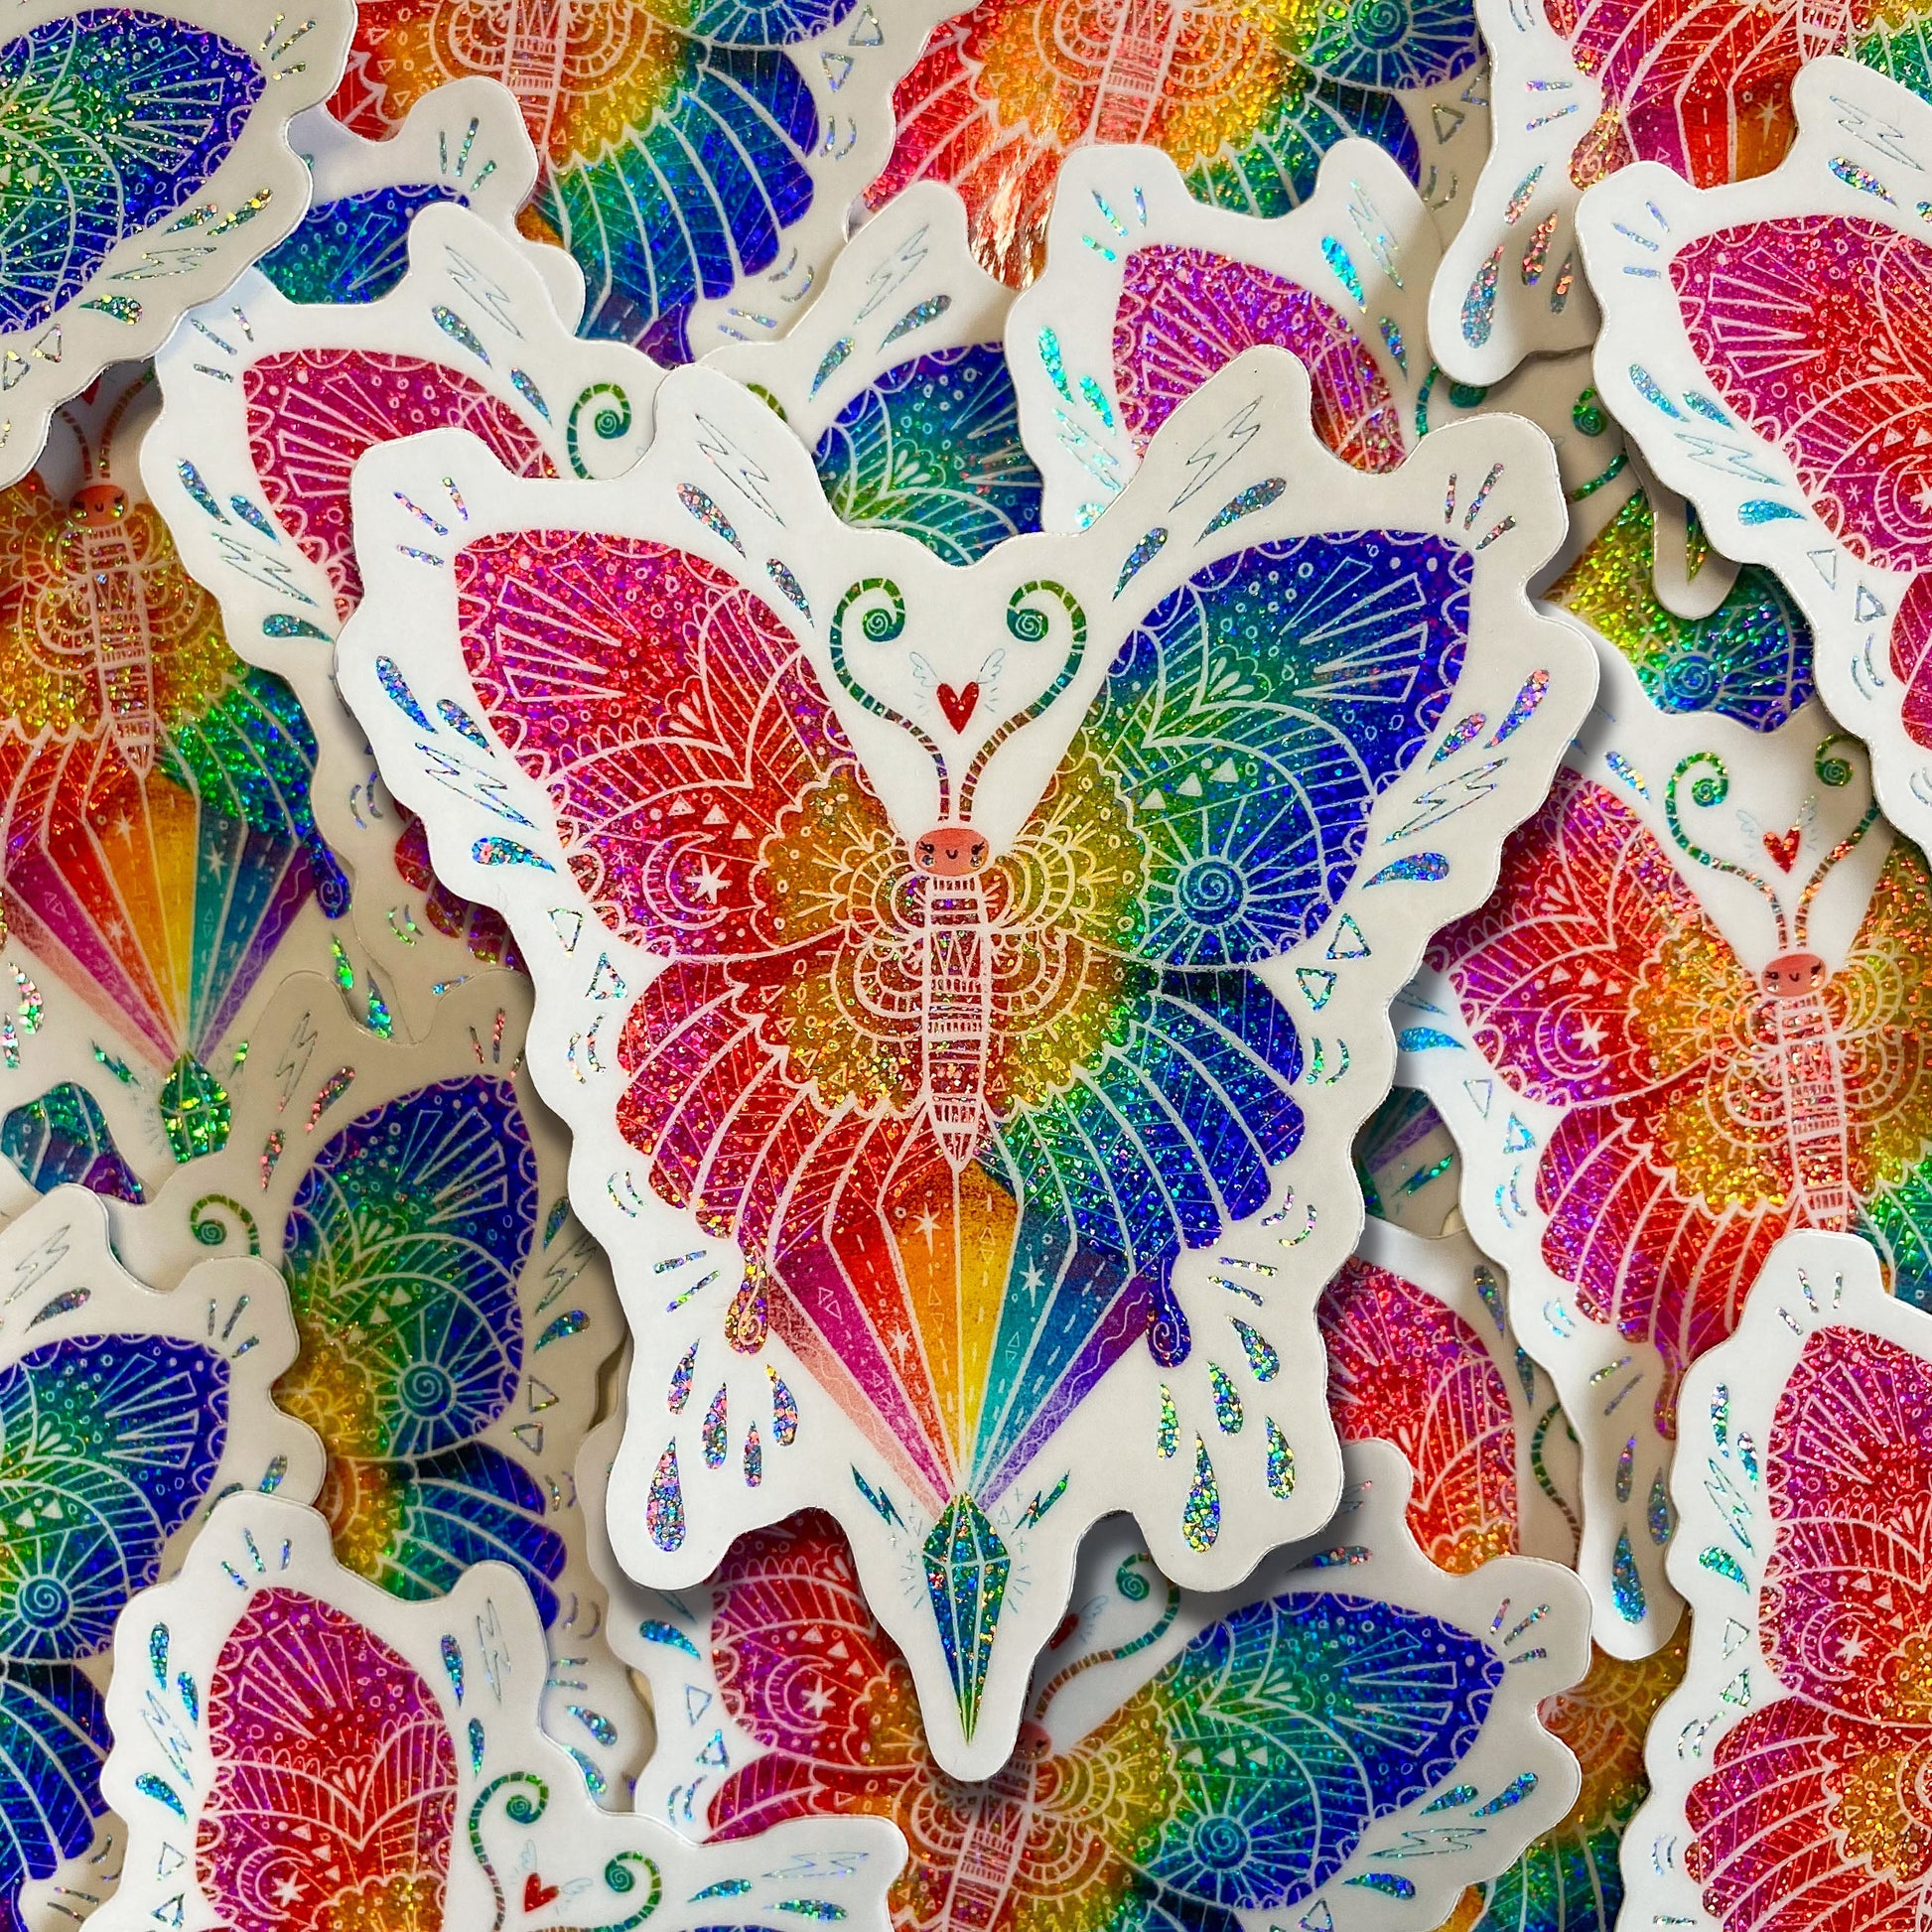 Butterfly Sticker Set Sticker for Sale by RosyRebelShop